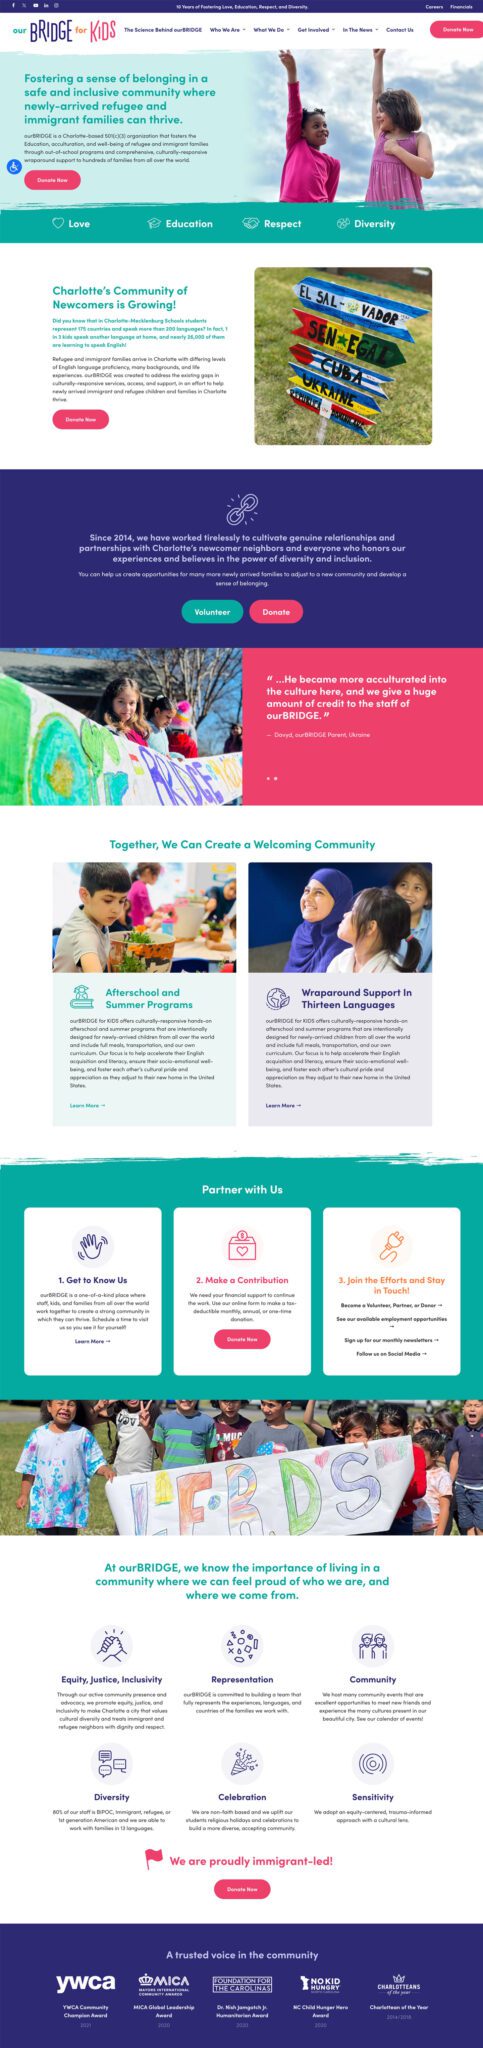 Woland Web Portfolio - Our Bridge For Kids